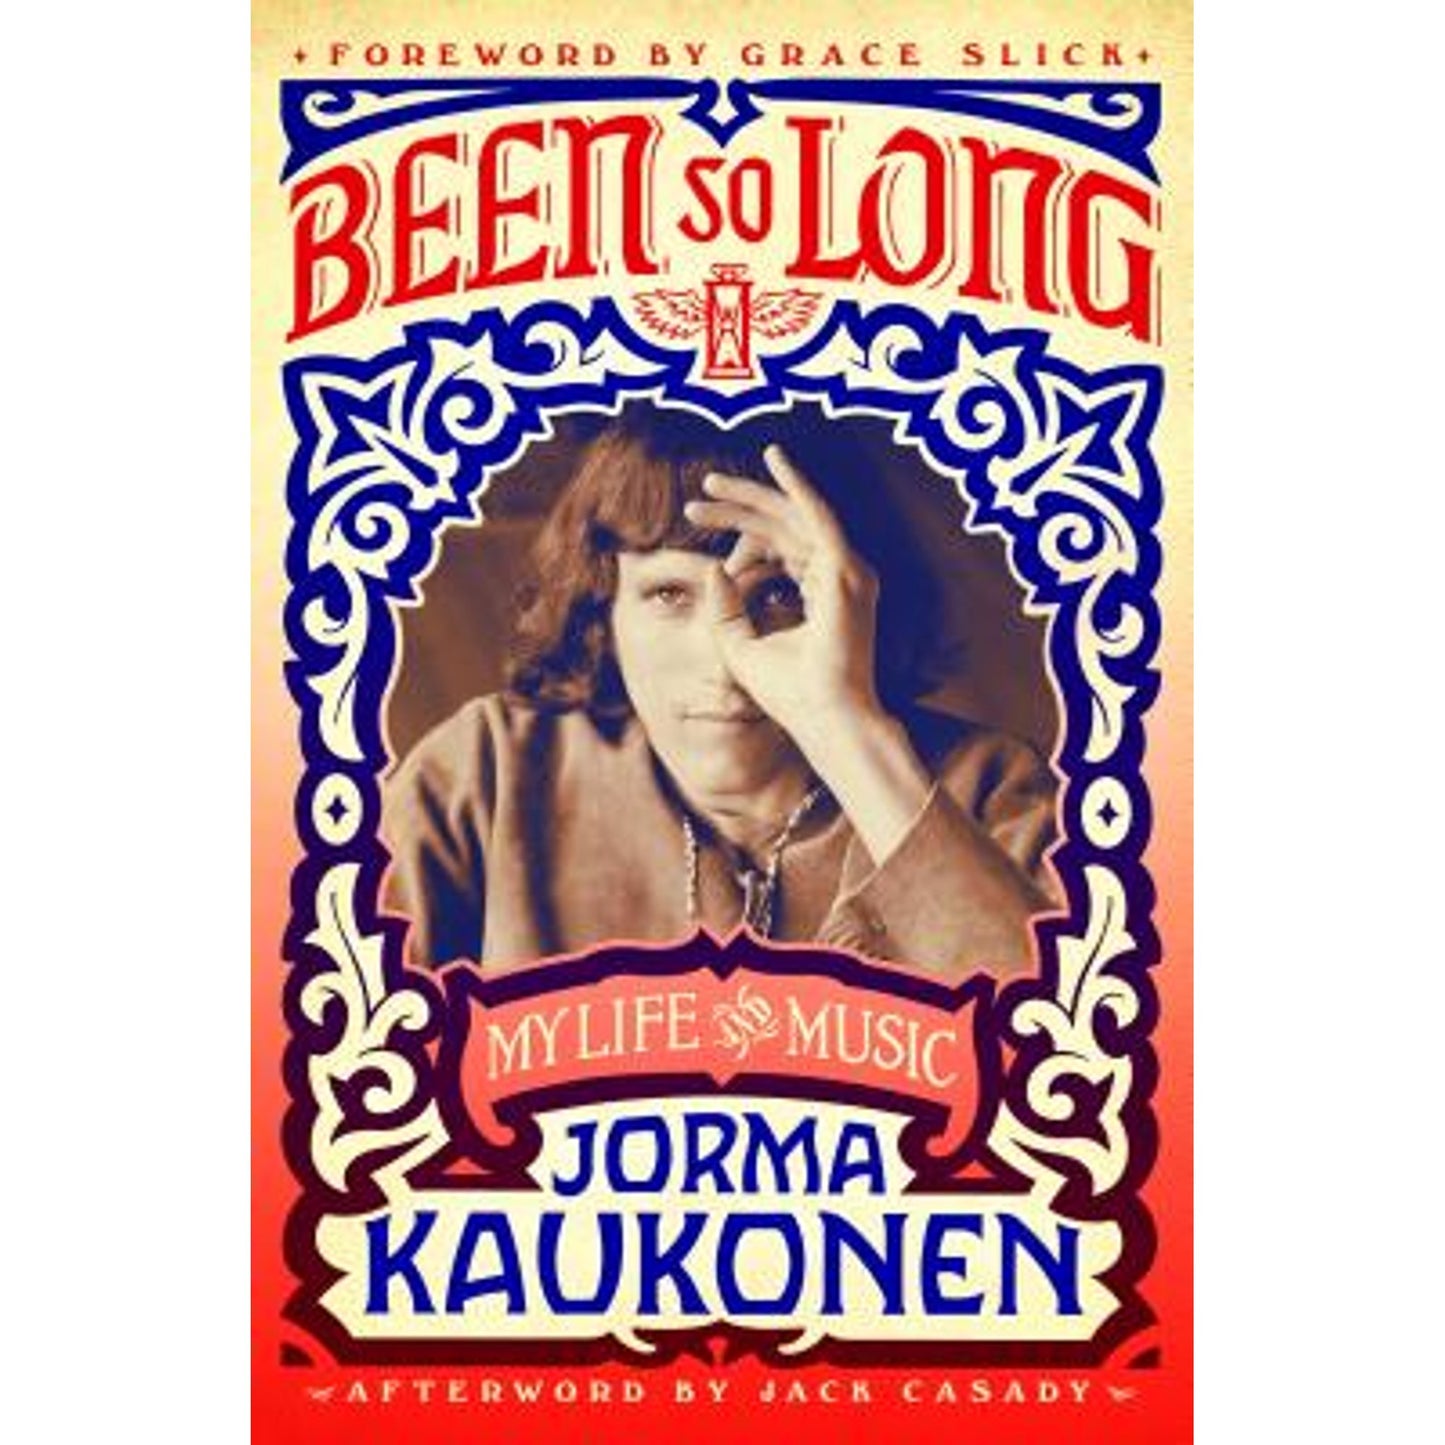 JEFFERSON AIRPLANE - JORMA KAUKONEN - BEEN SO LONG: MY LIFE AND MUSIC - PAPERBACK - BOOK